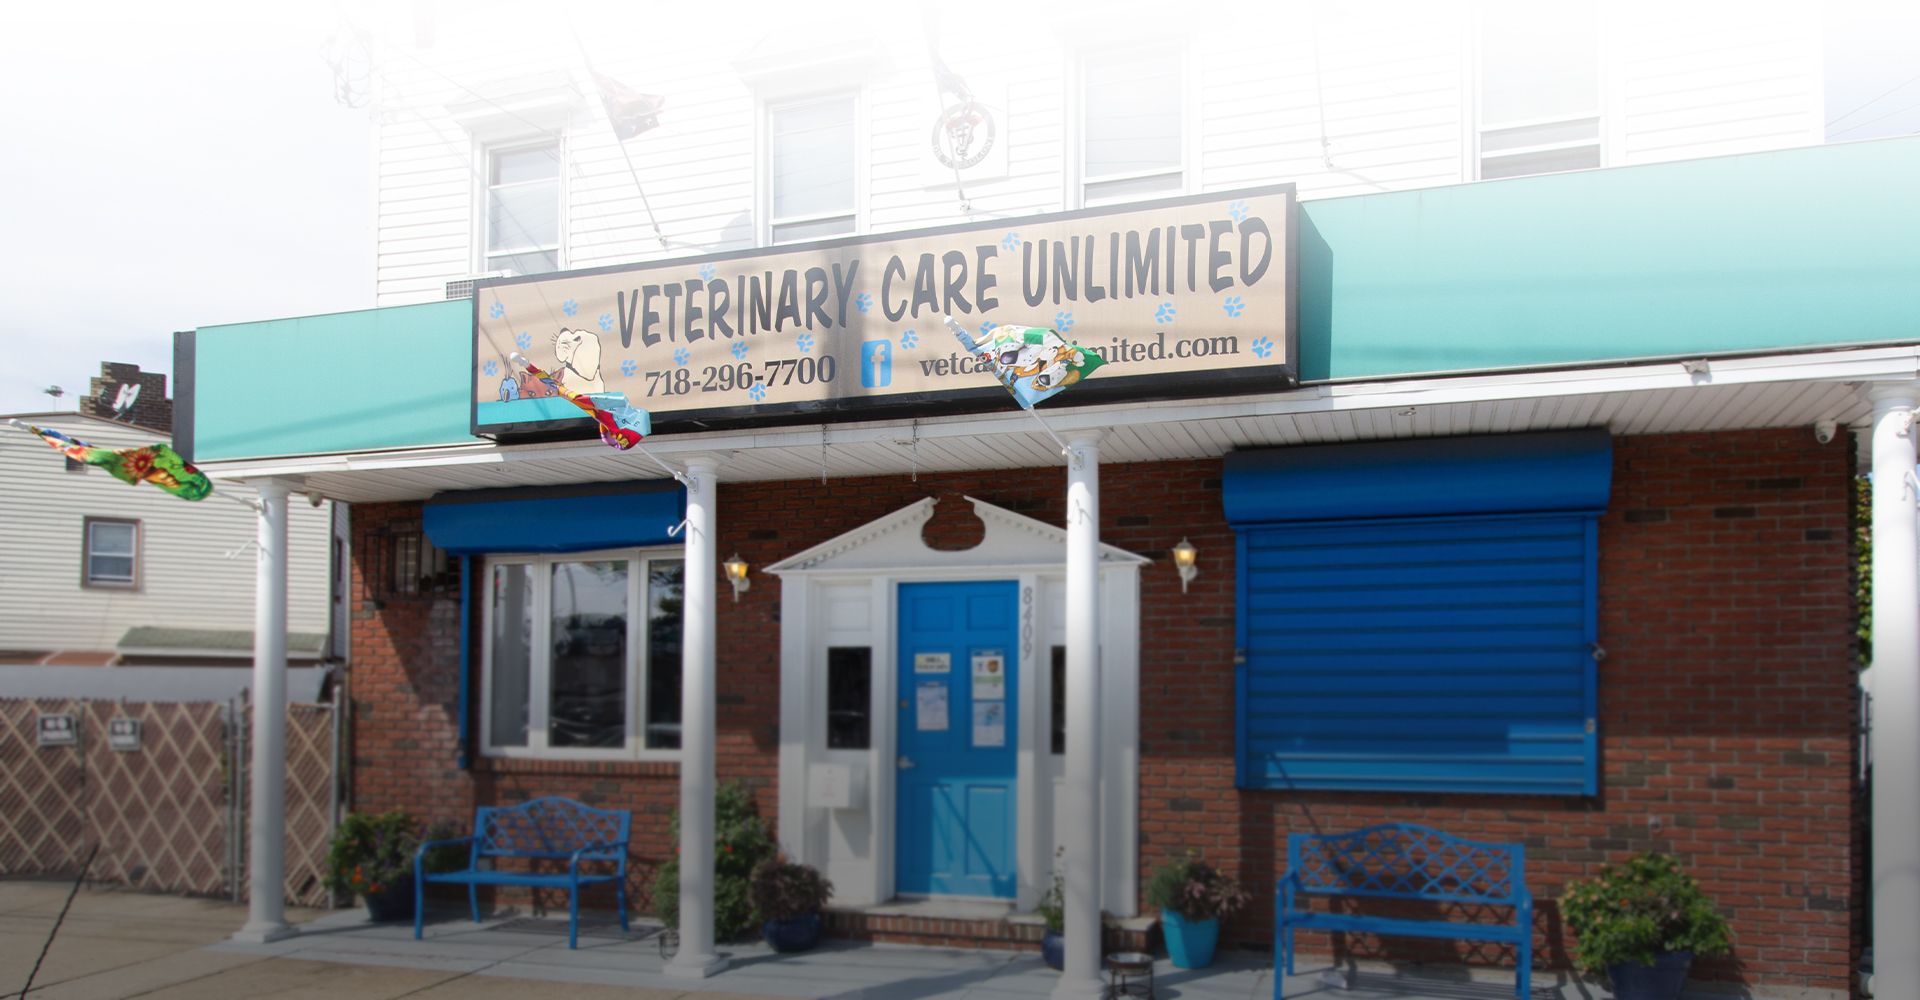 veterinary care unlimited facade